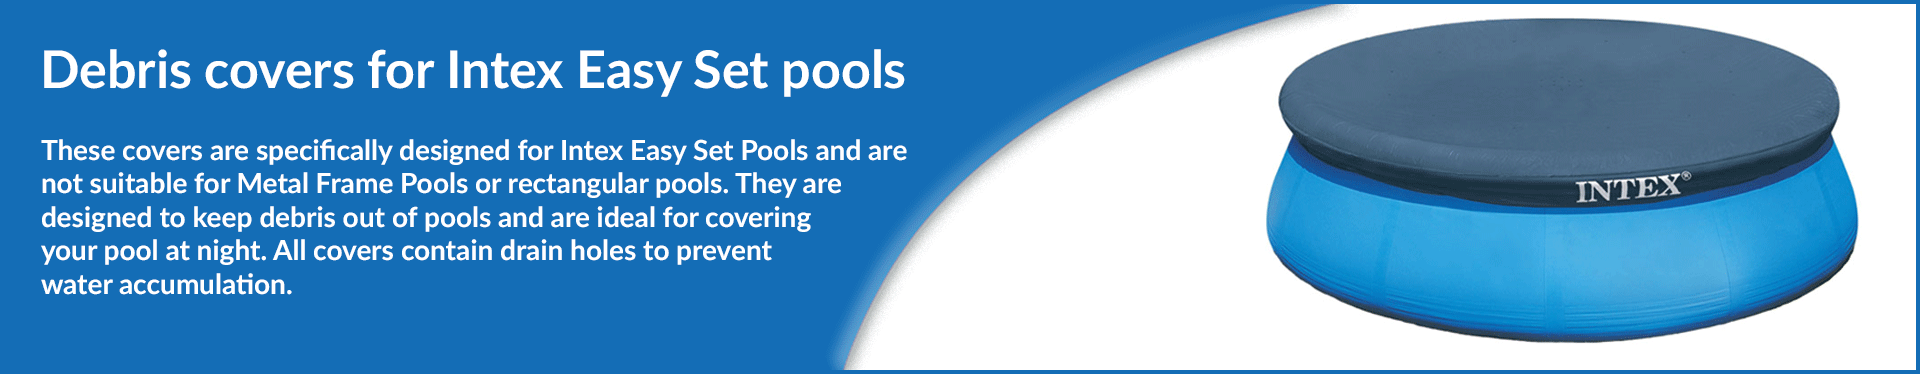 Intex Easy Set Pool Covers